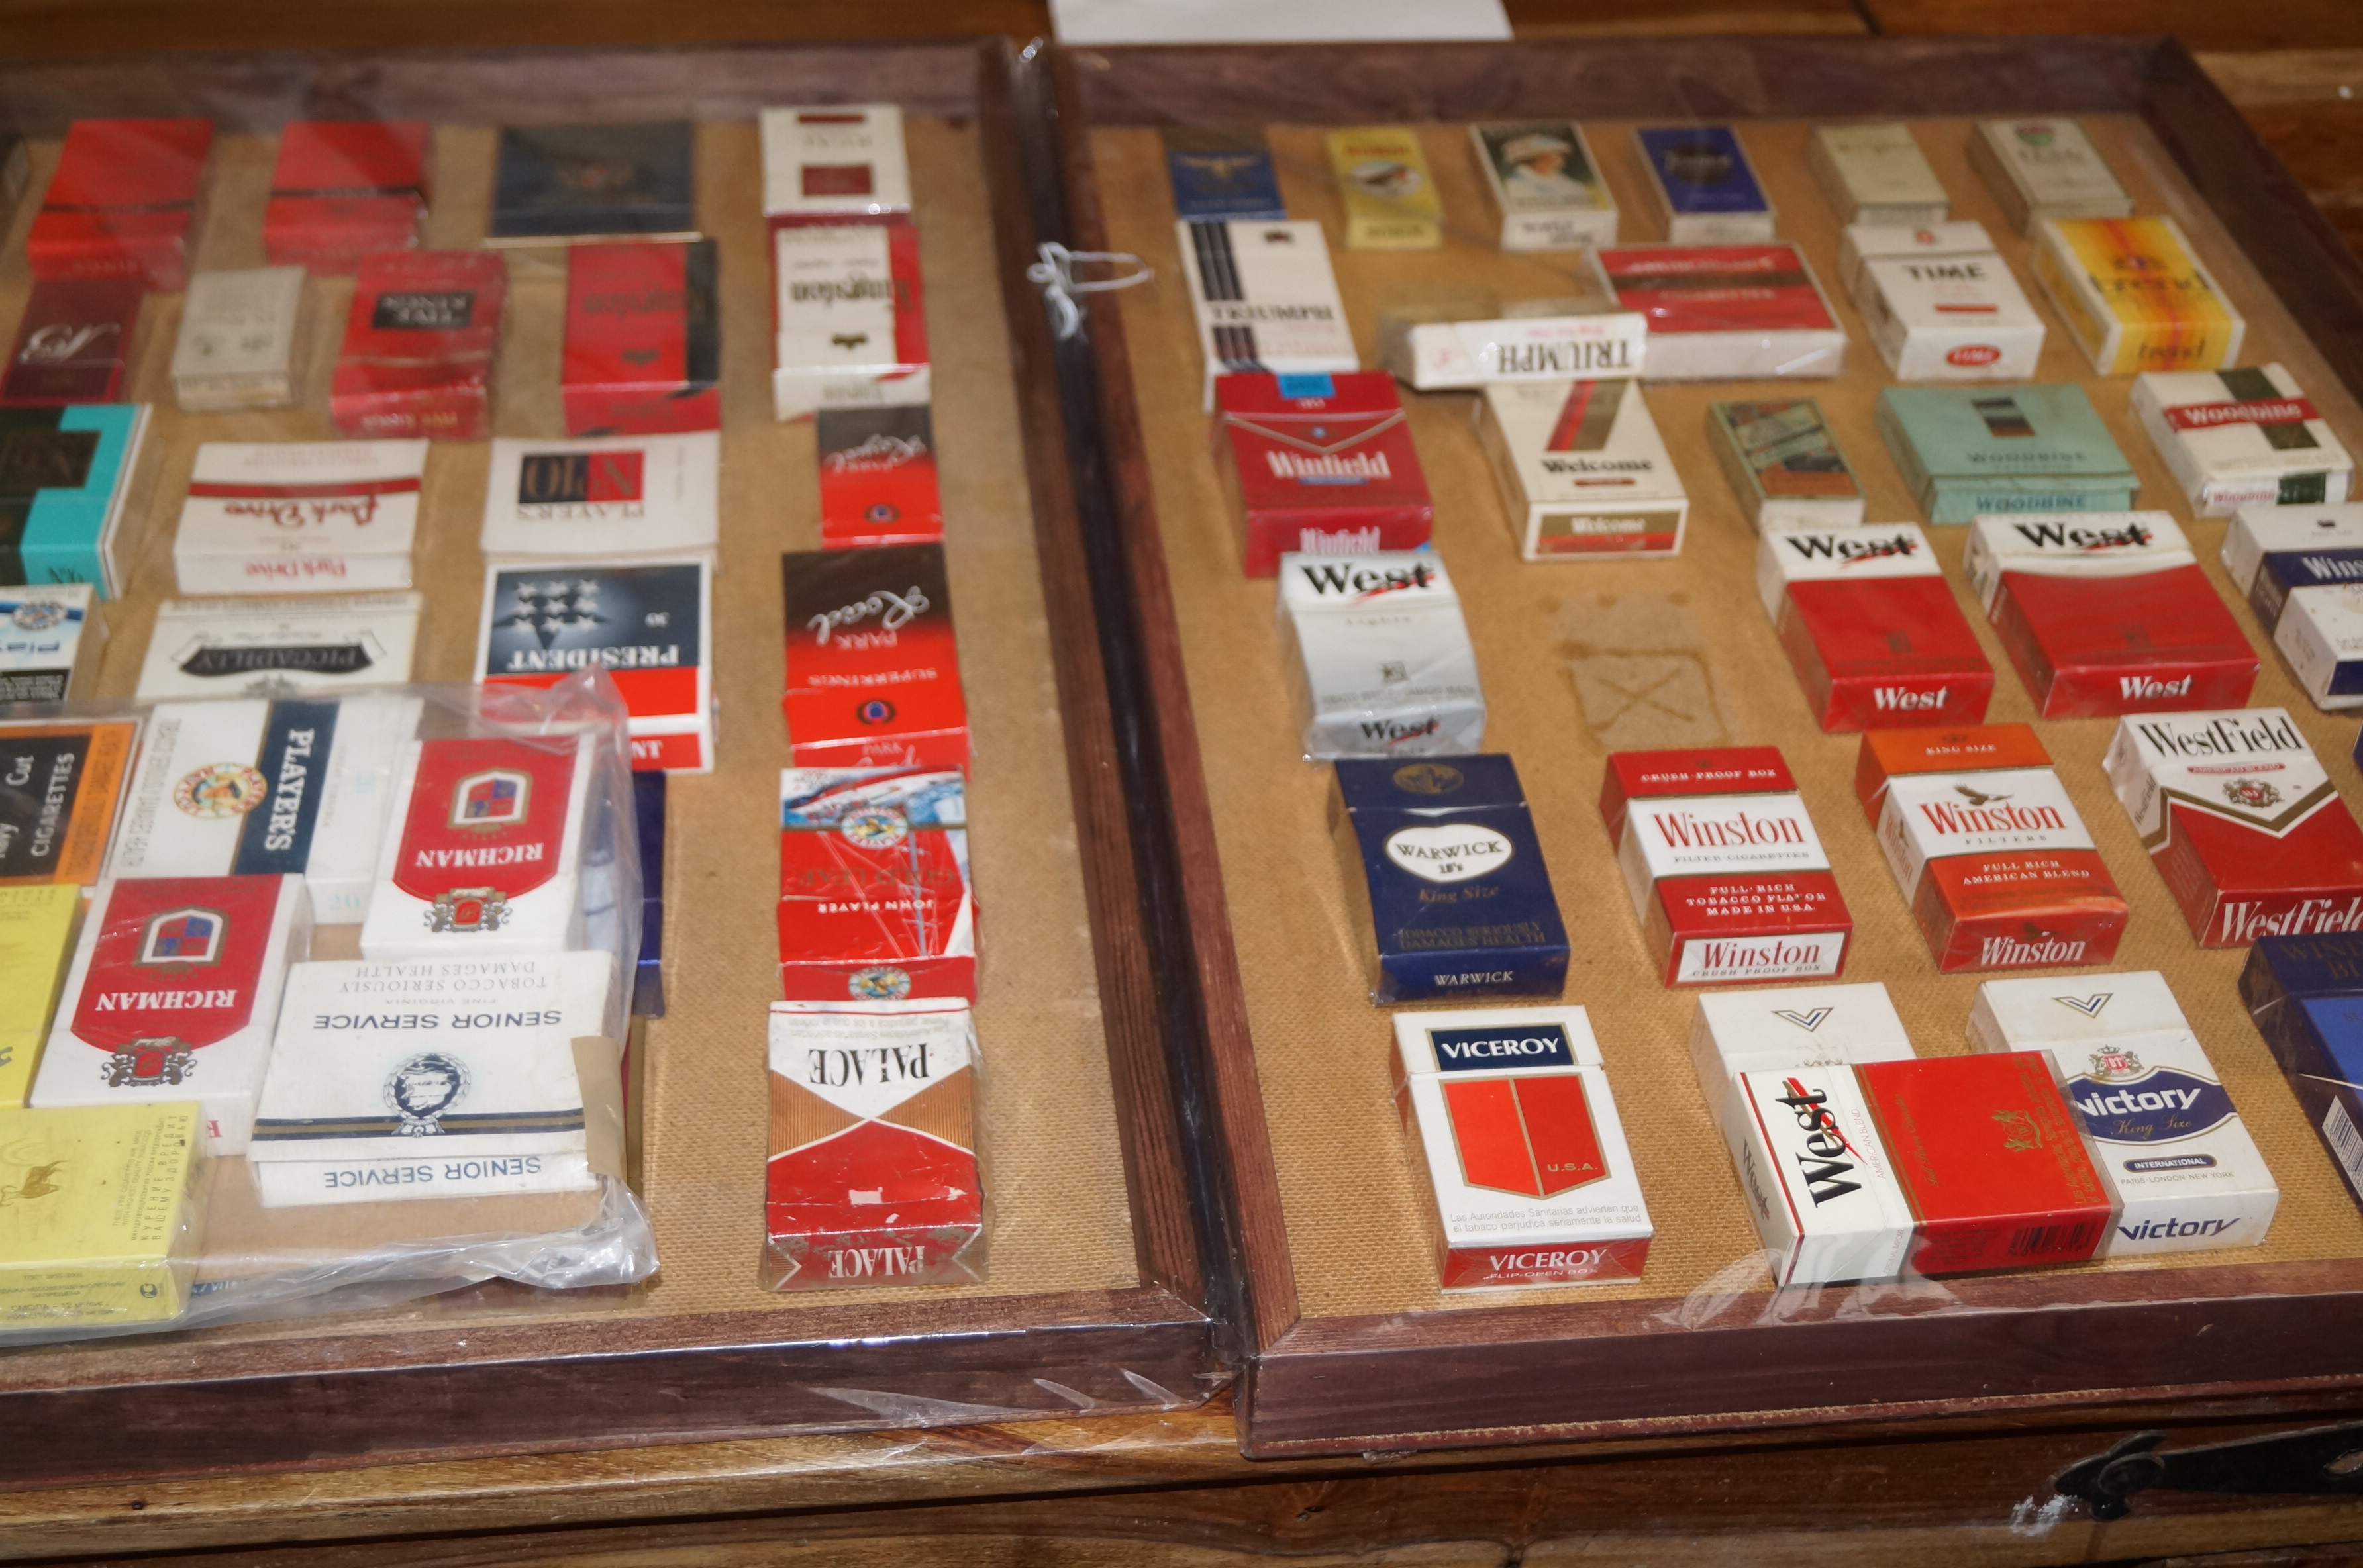 2 Cases of cigarette boxes